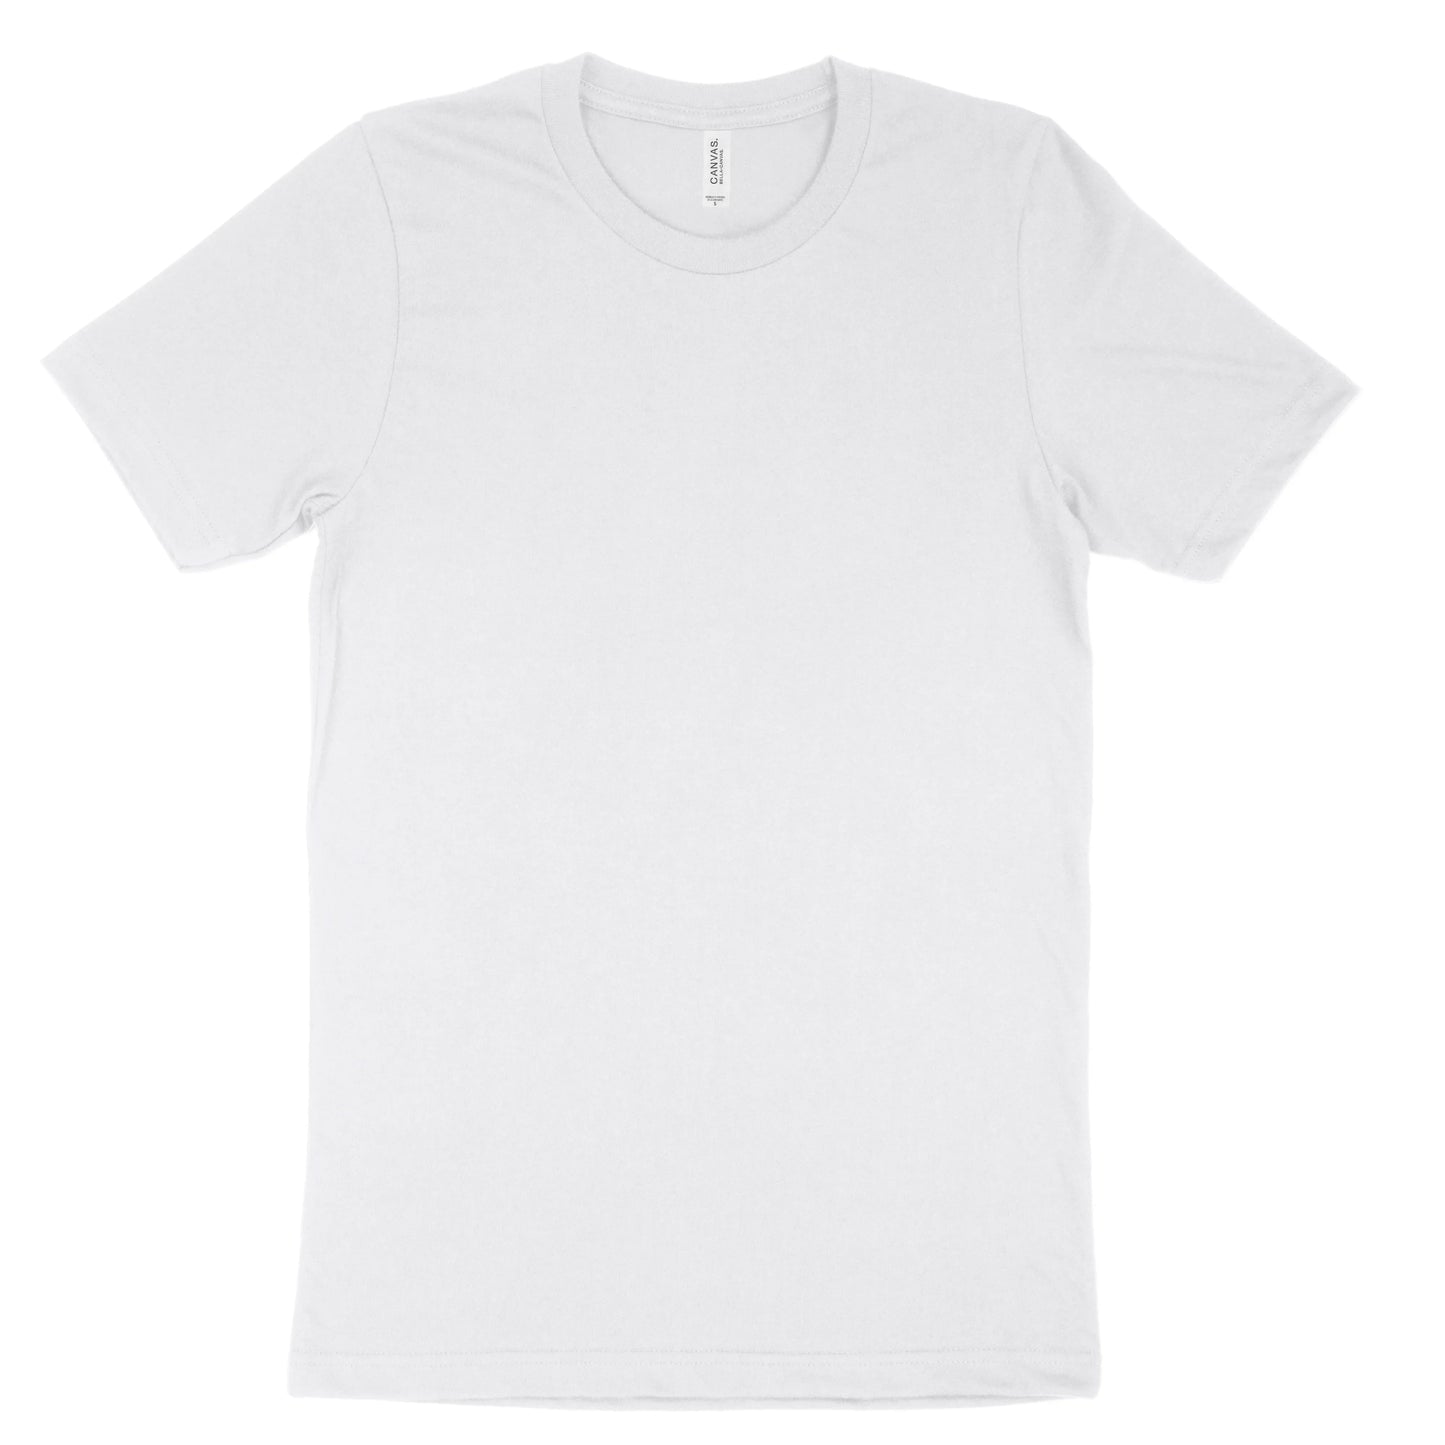 MerchBlue Union-Printed Custom T-shirt - Star Line Design